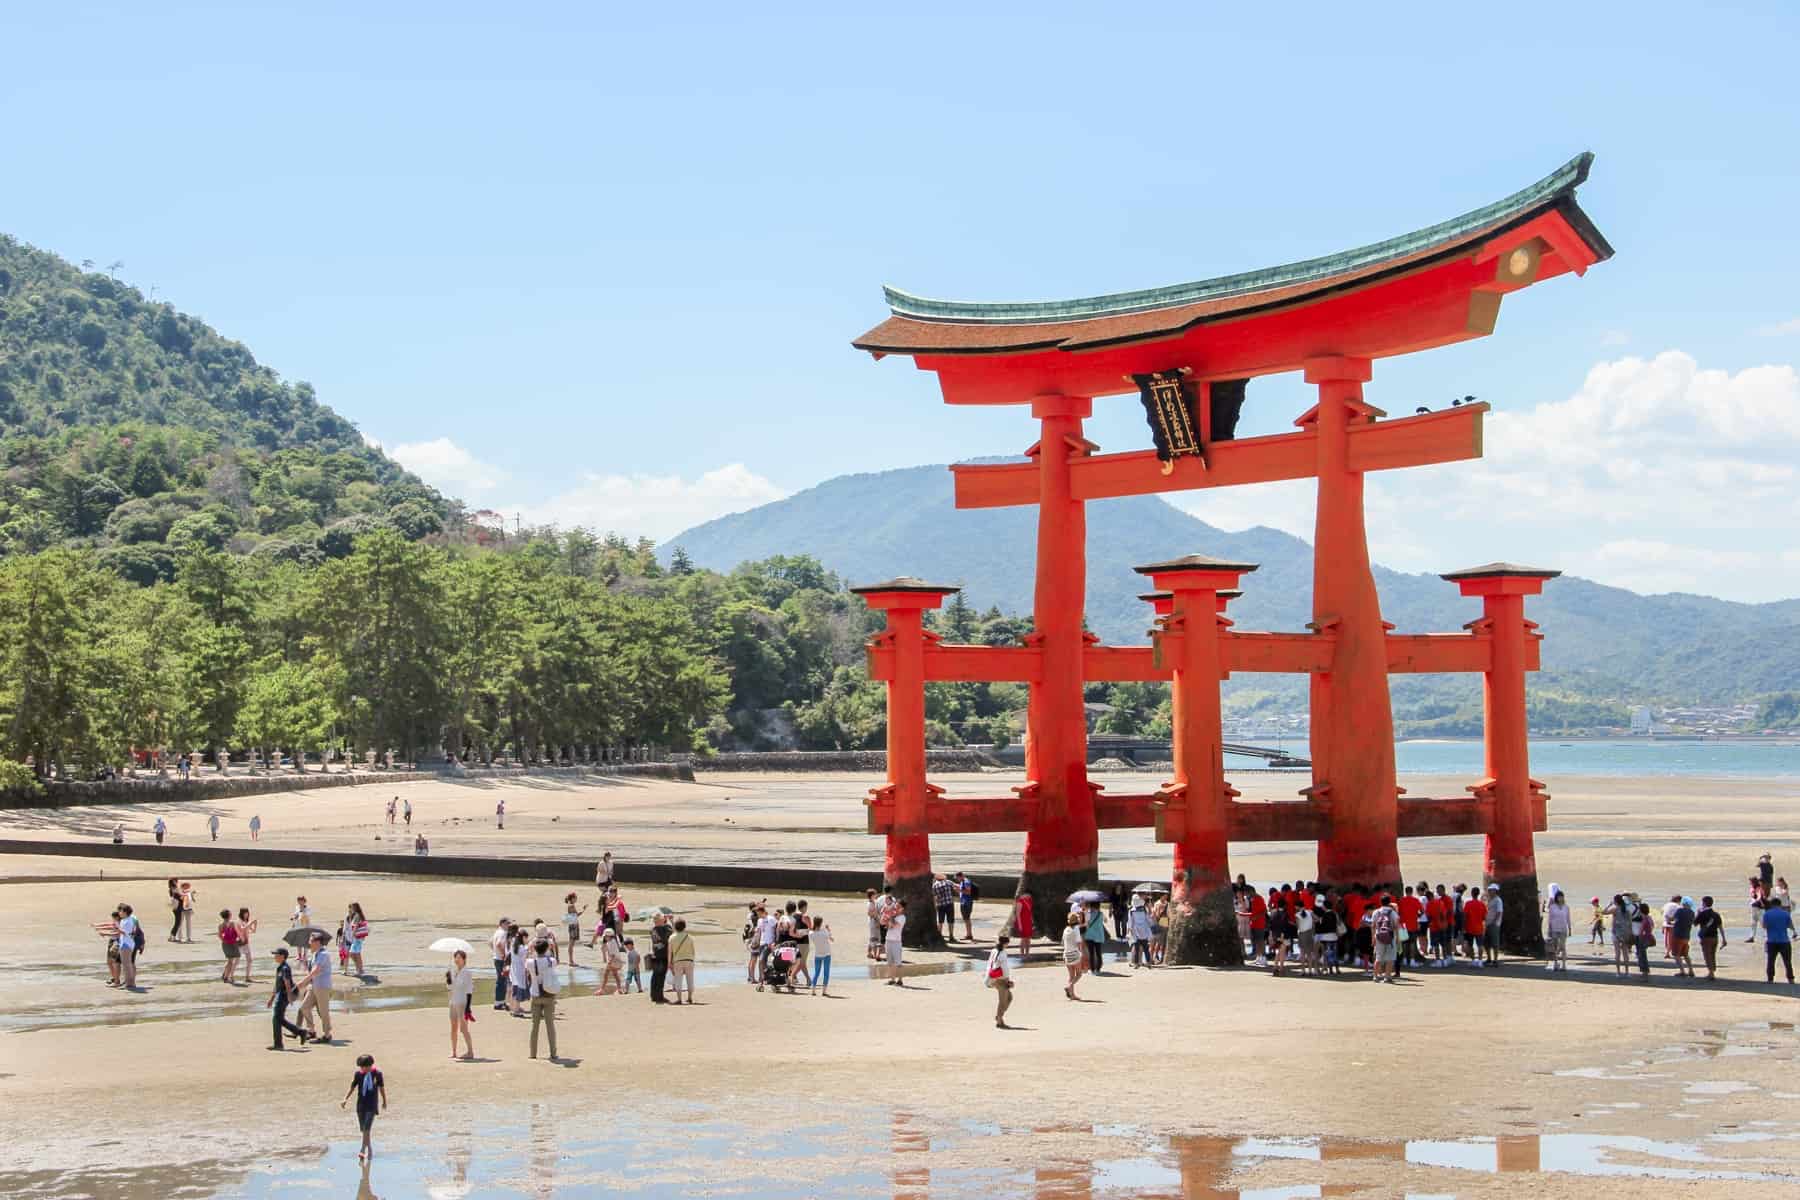 A red Japanese tori gate on a forest backed beach - the Itsukushima Floating Torii Gate on Miyajima Island..